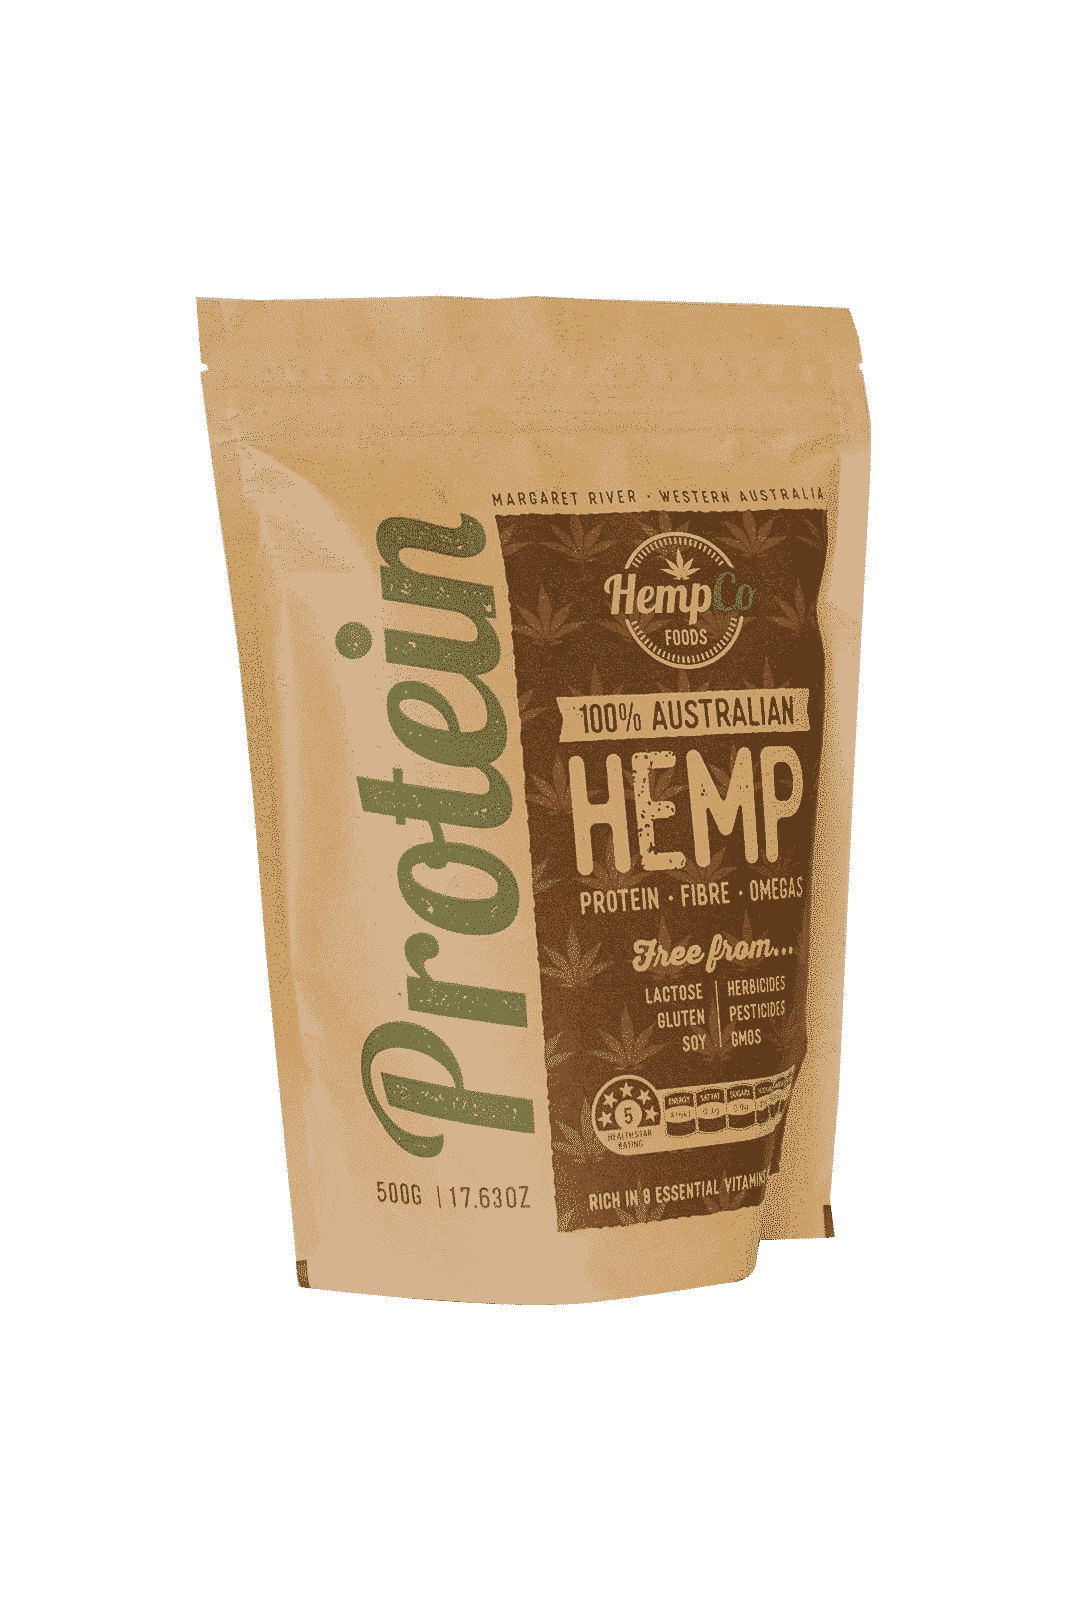 Hemp Protein - Australian Grown - Margaret River Hemp Co